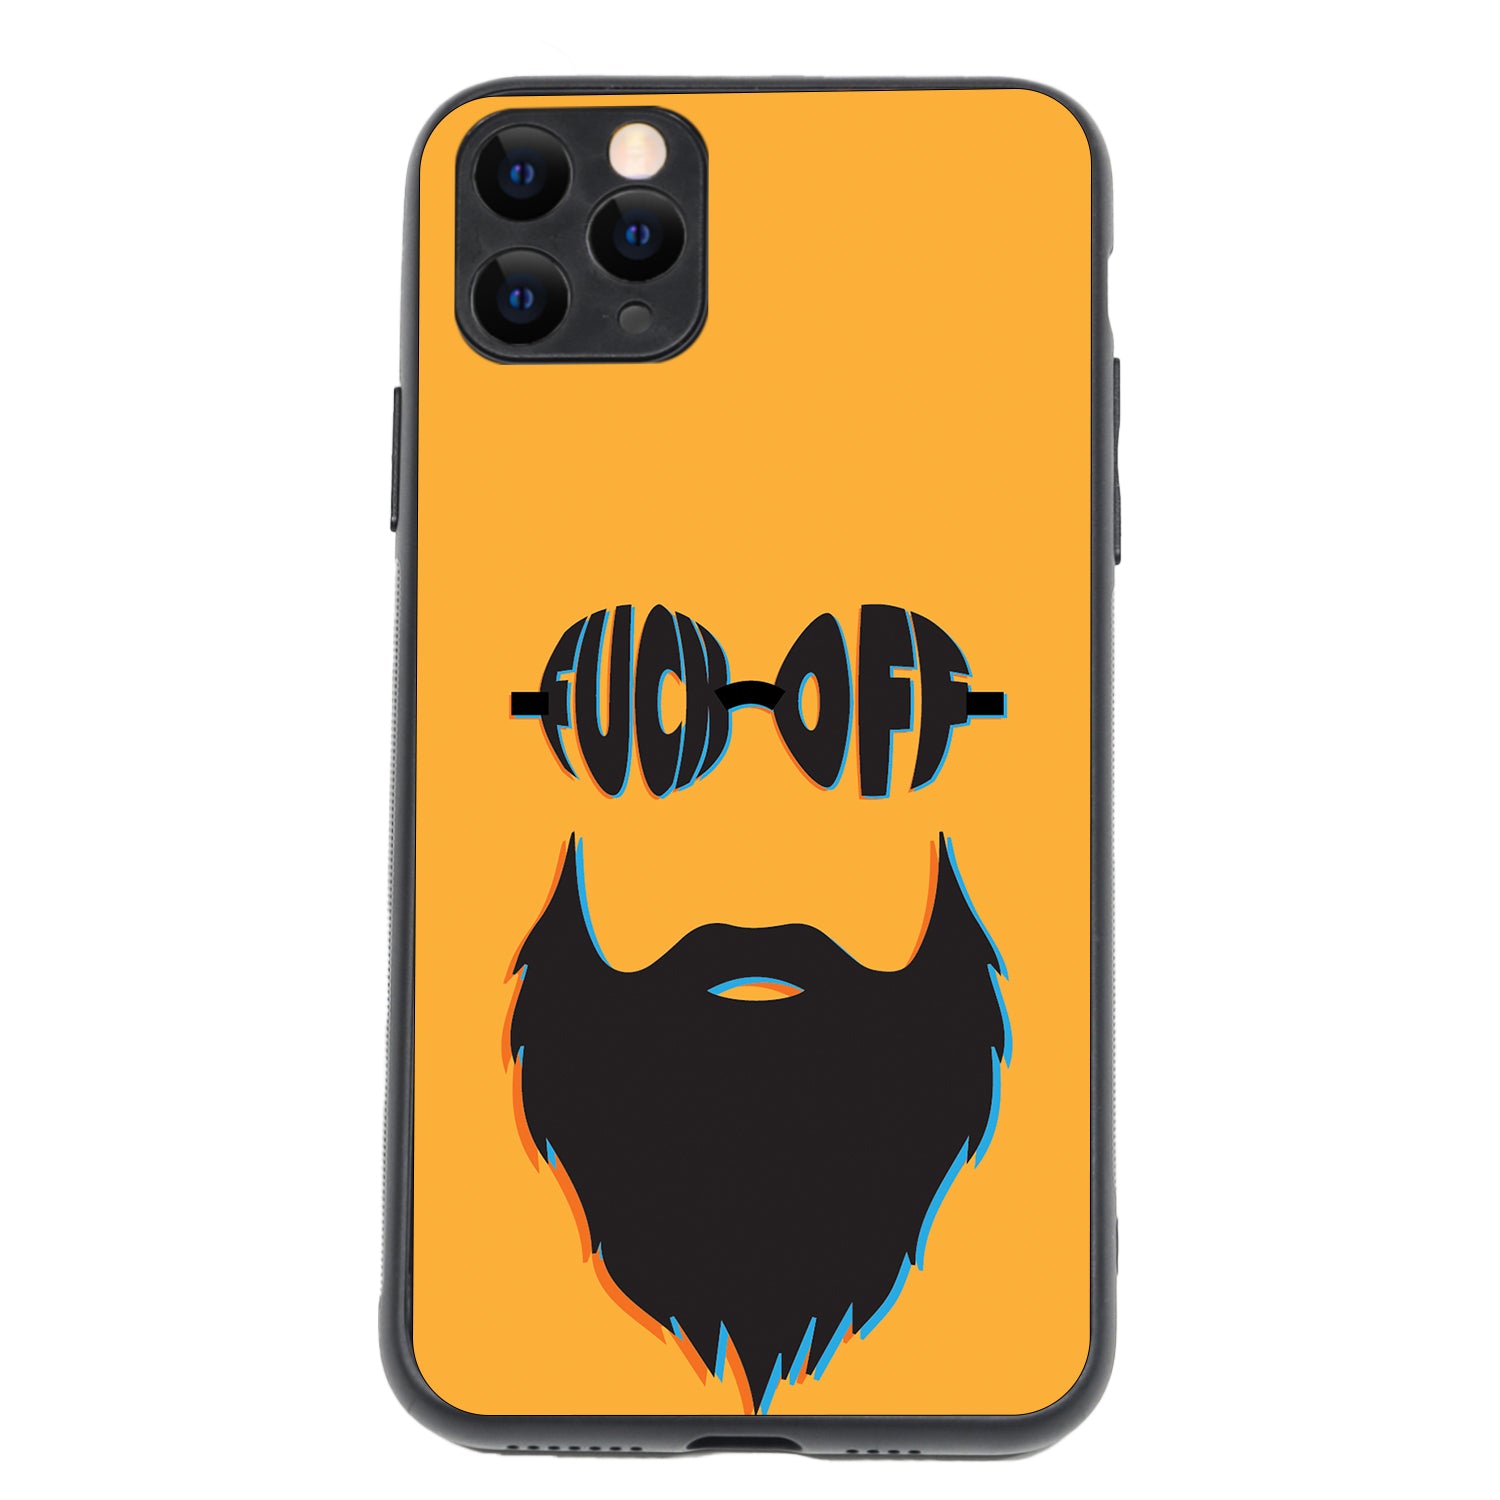 Beard Masculine iPhone 11 Pro Max Case